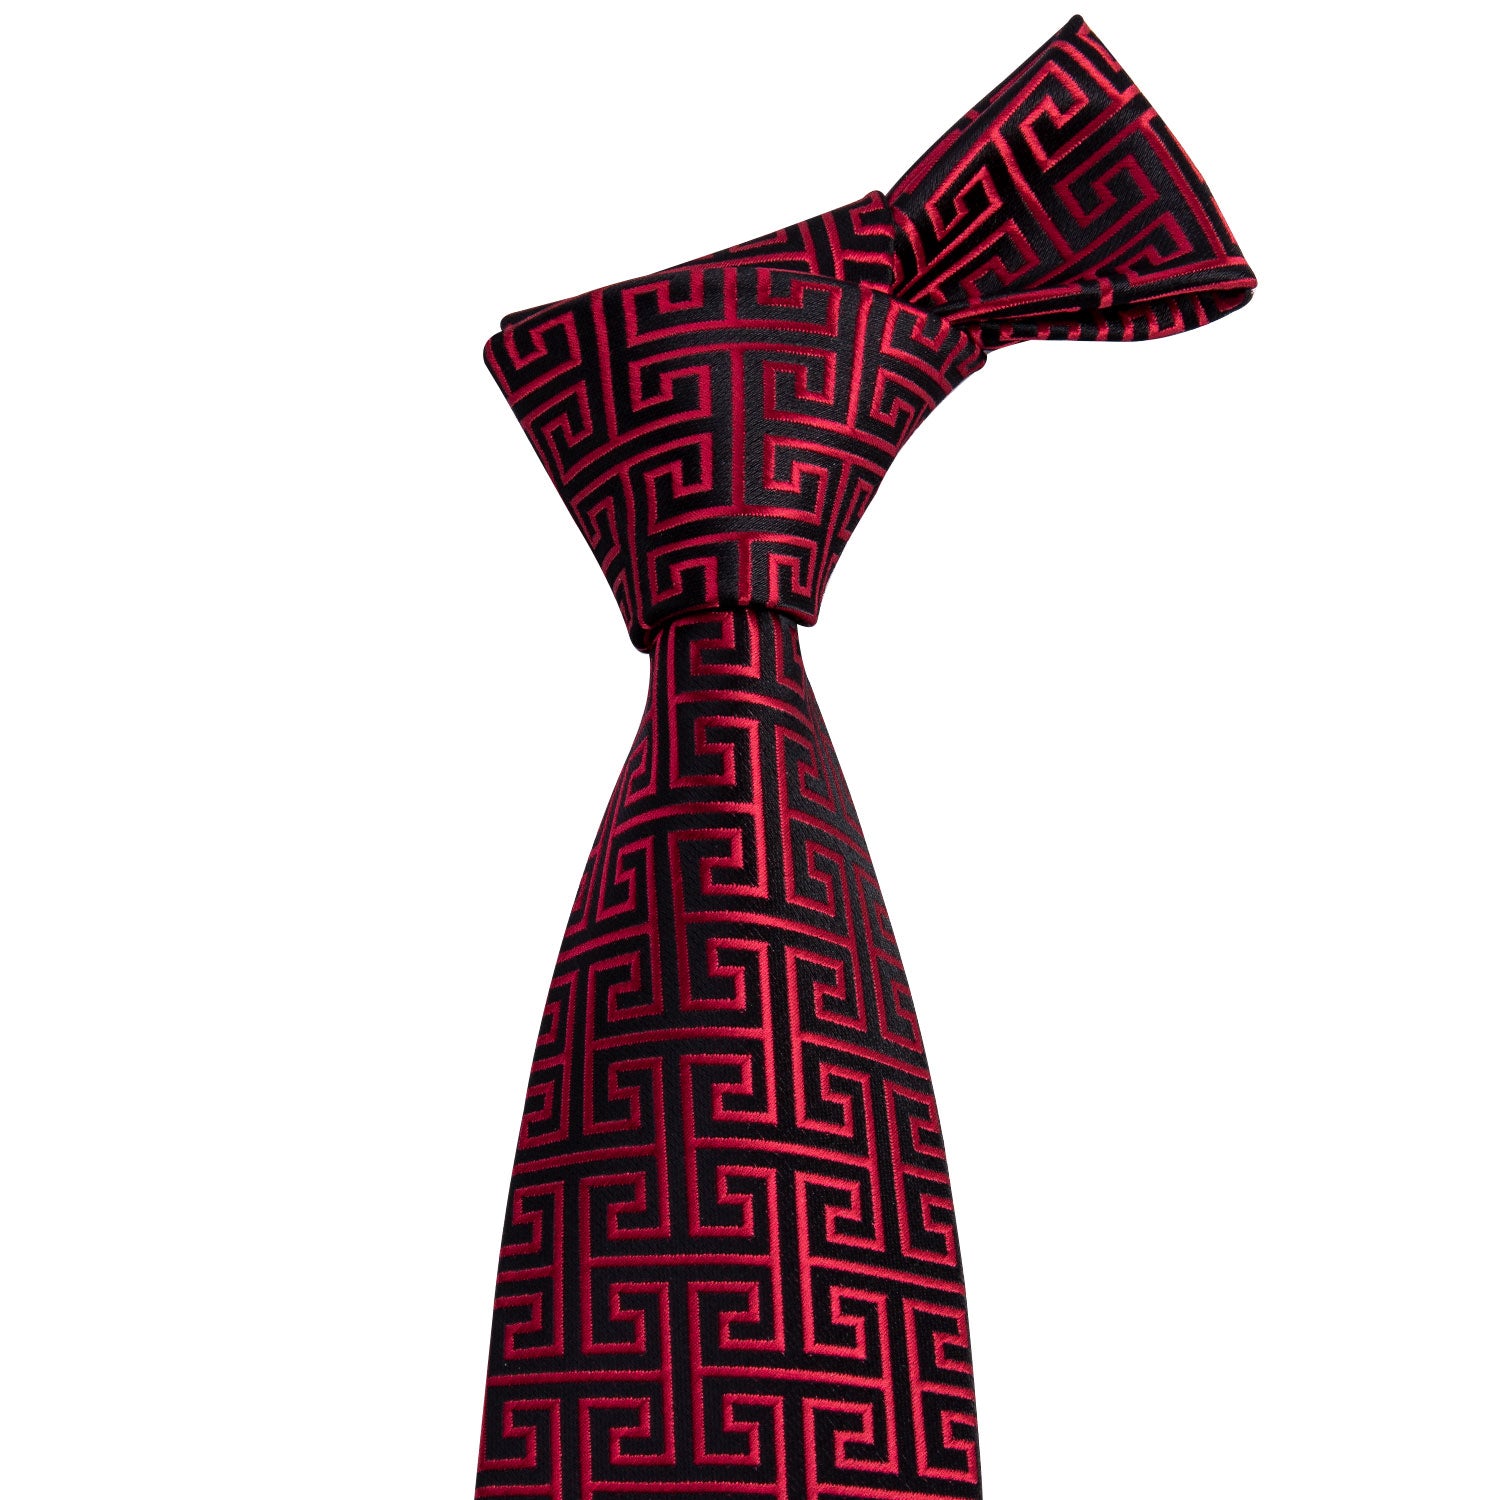 Black Red Geometric Novelty Silk Men's Tie Pocket Square Cufflinks Set